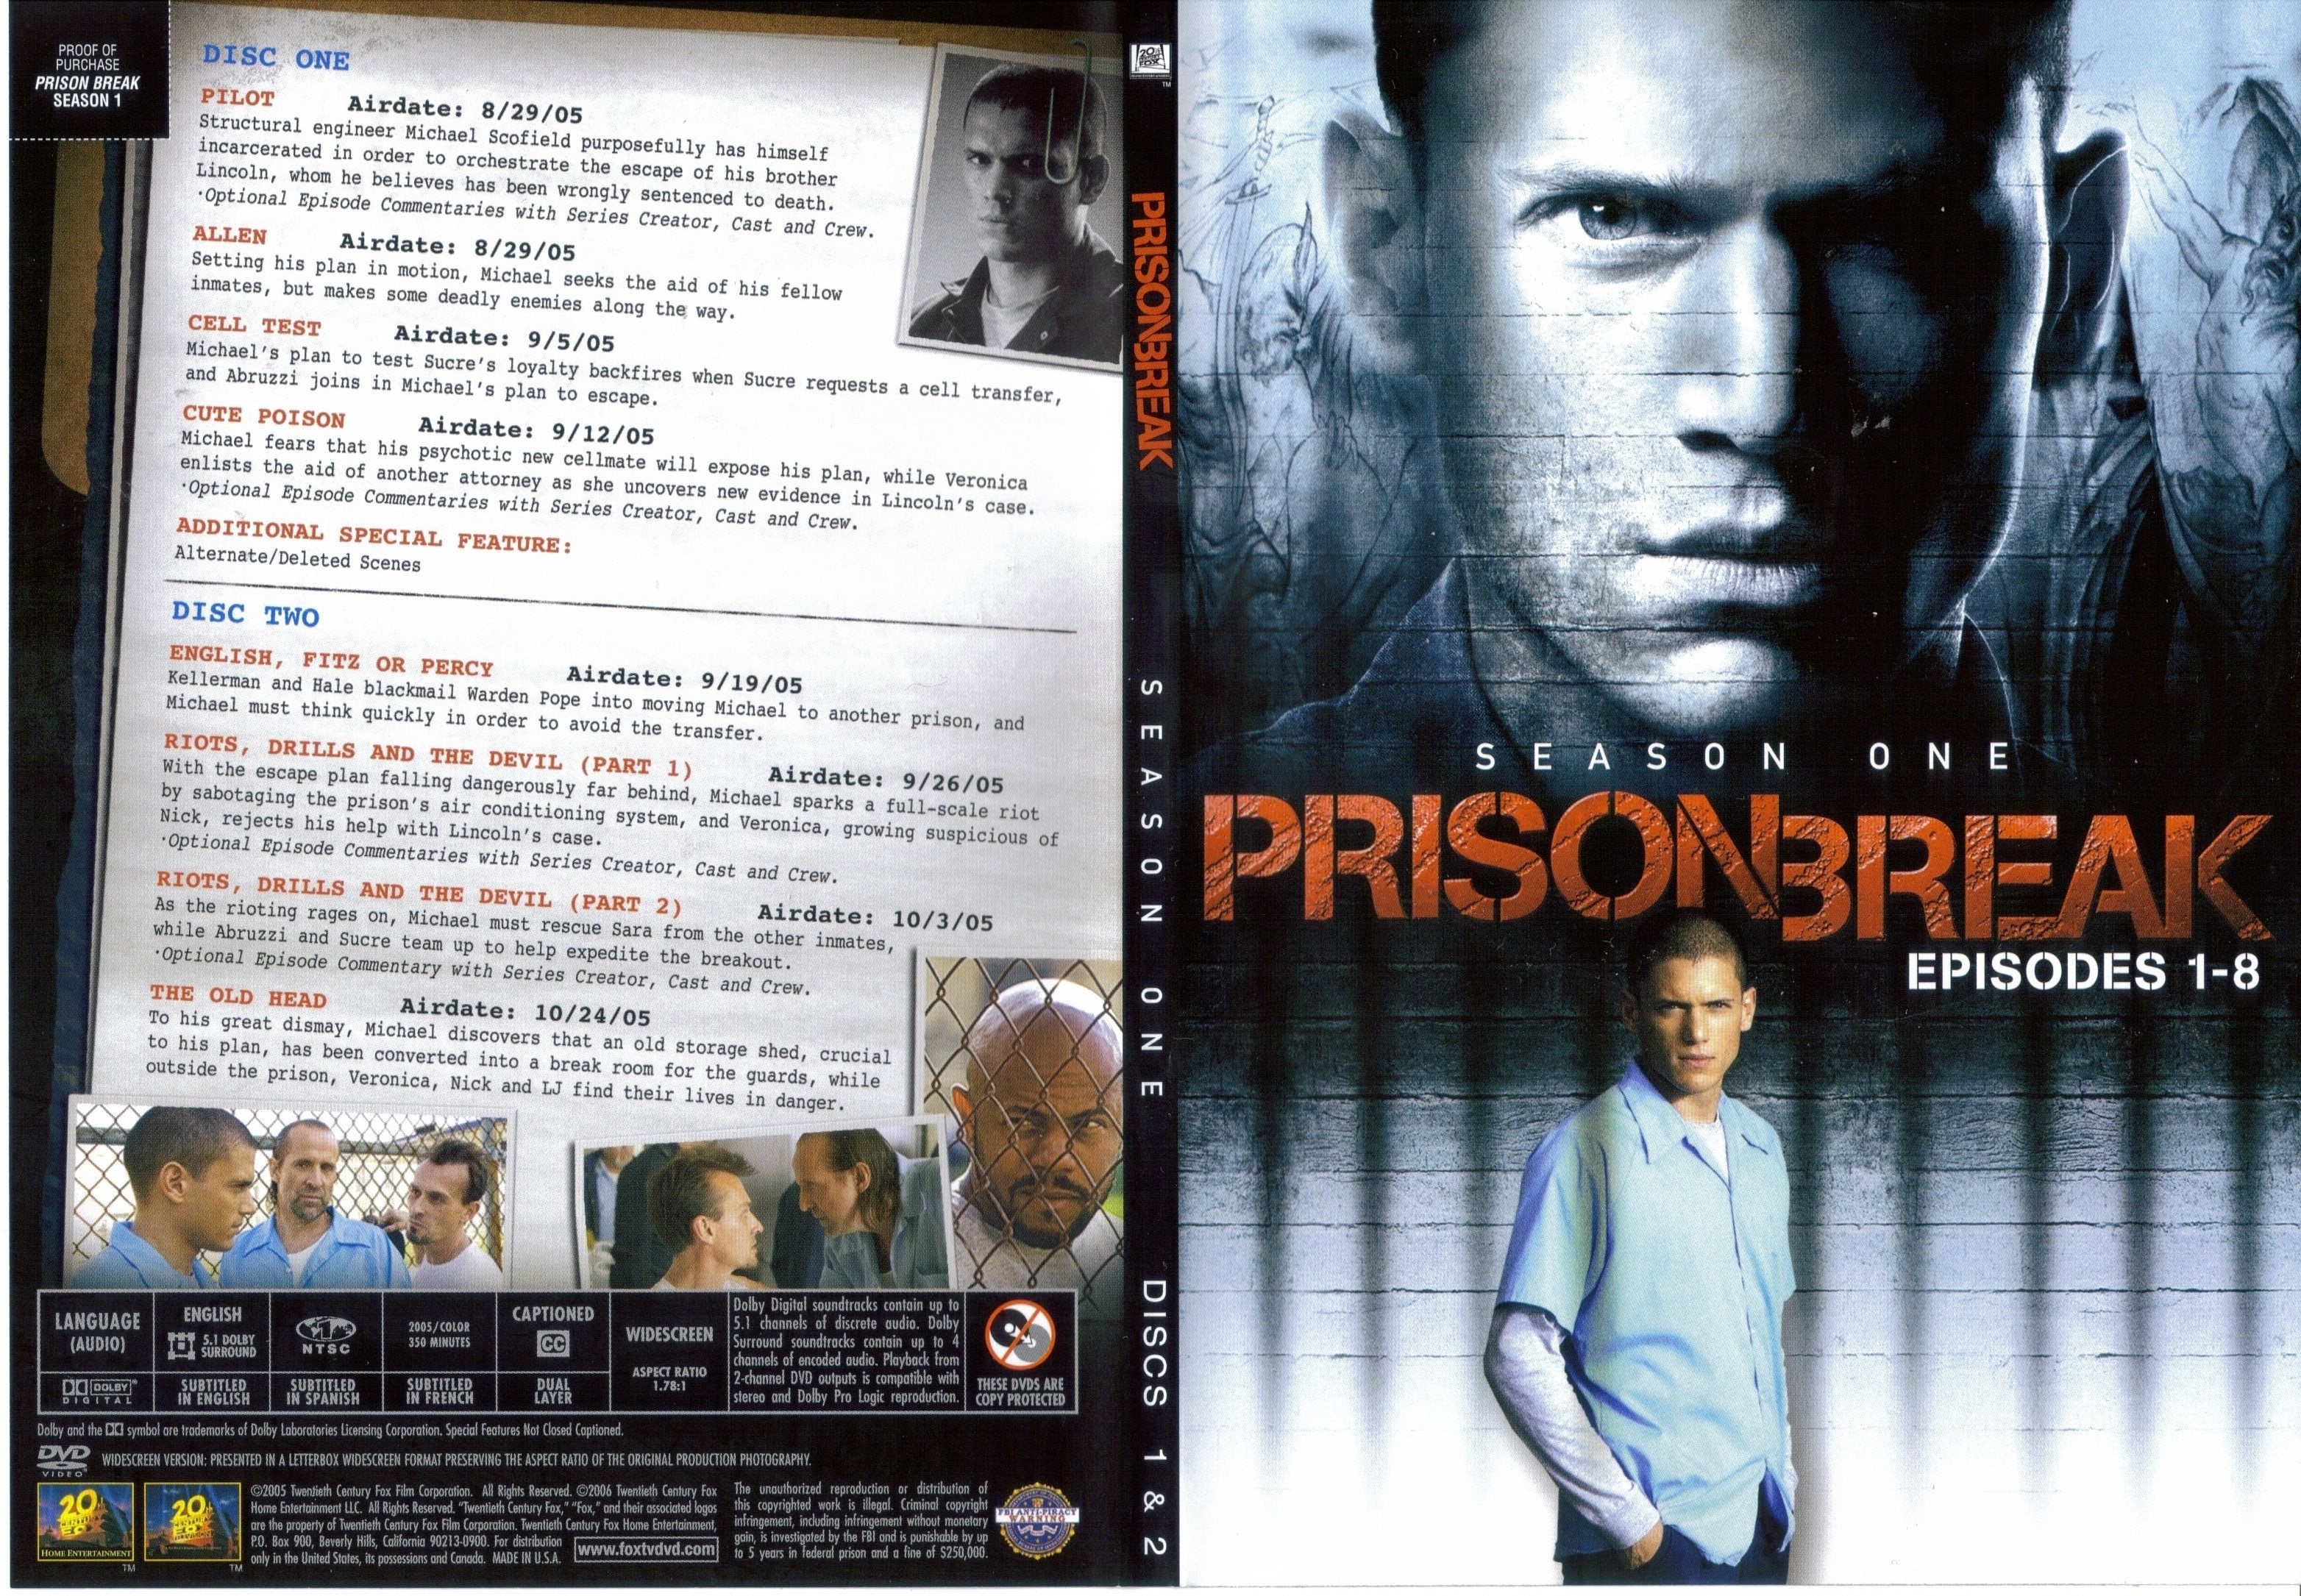 Jaquette DVD Prison break saison 1 DVD 1 - SLIM (Canadienne)